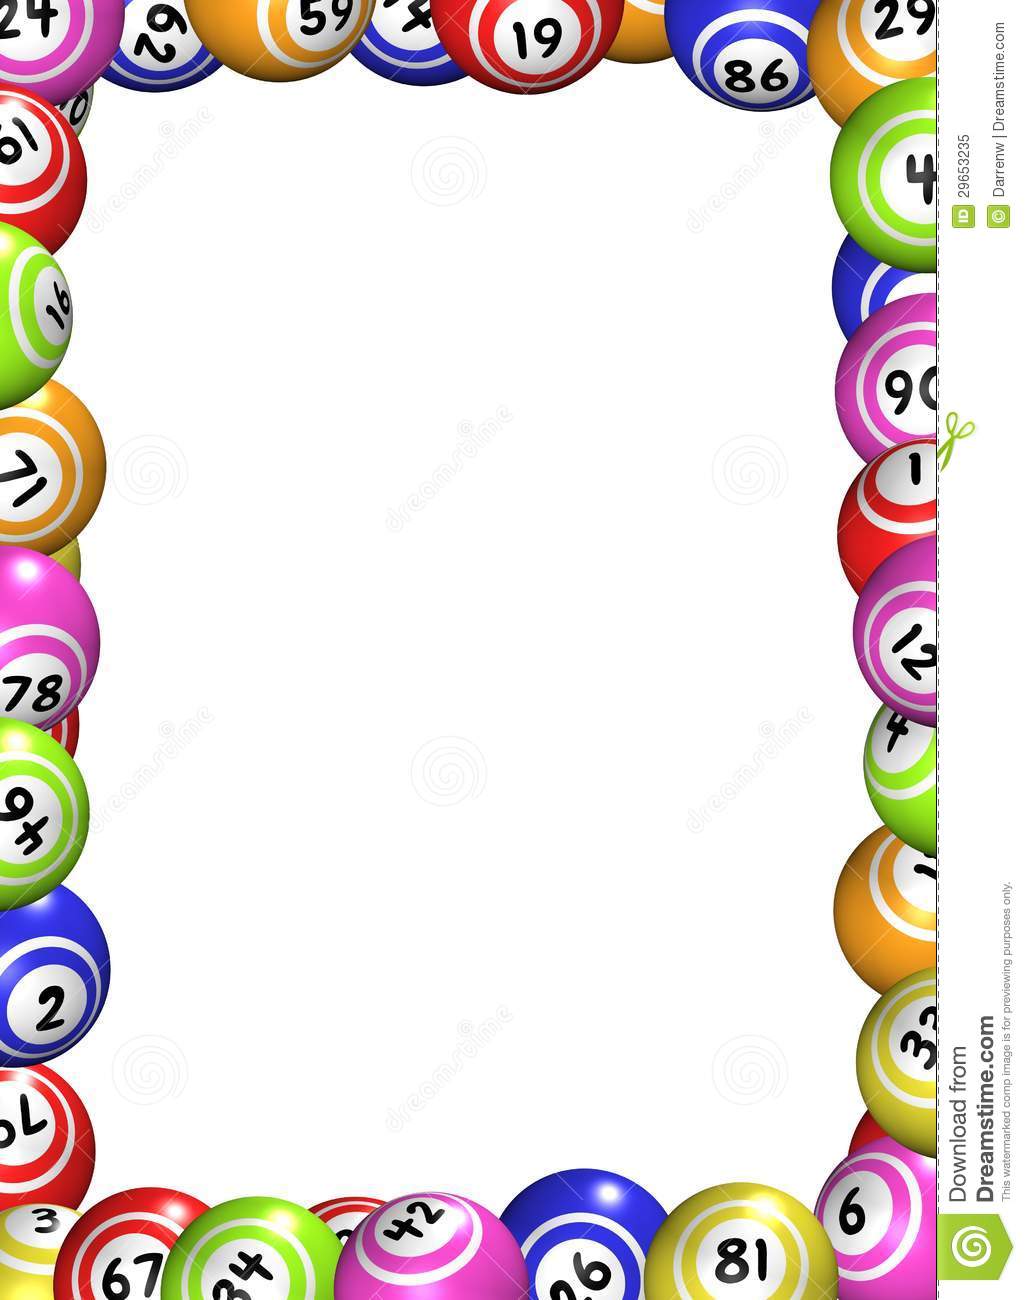 Bingo Clip Art Borders Bingo Balls Frame